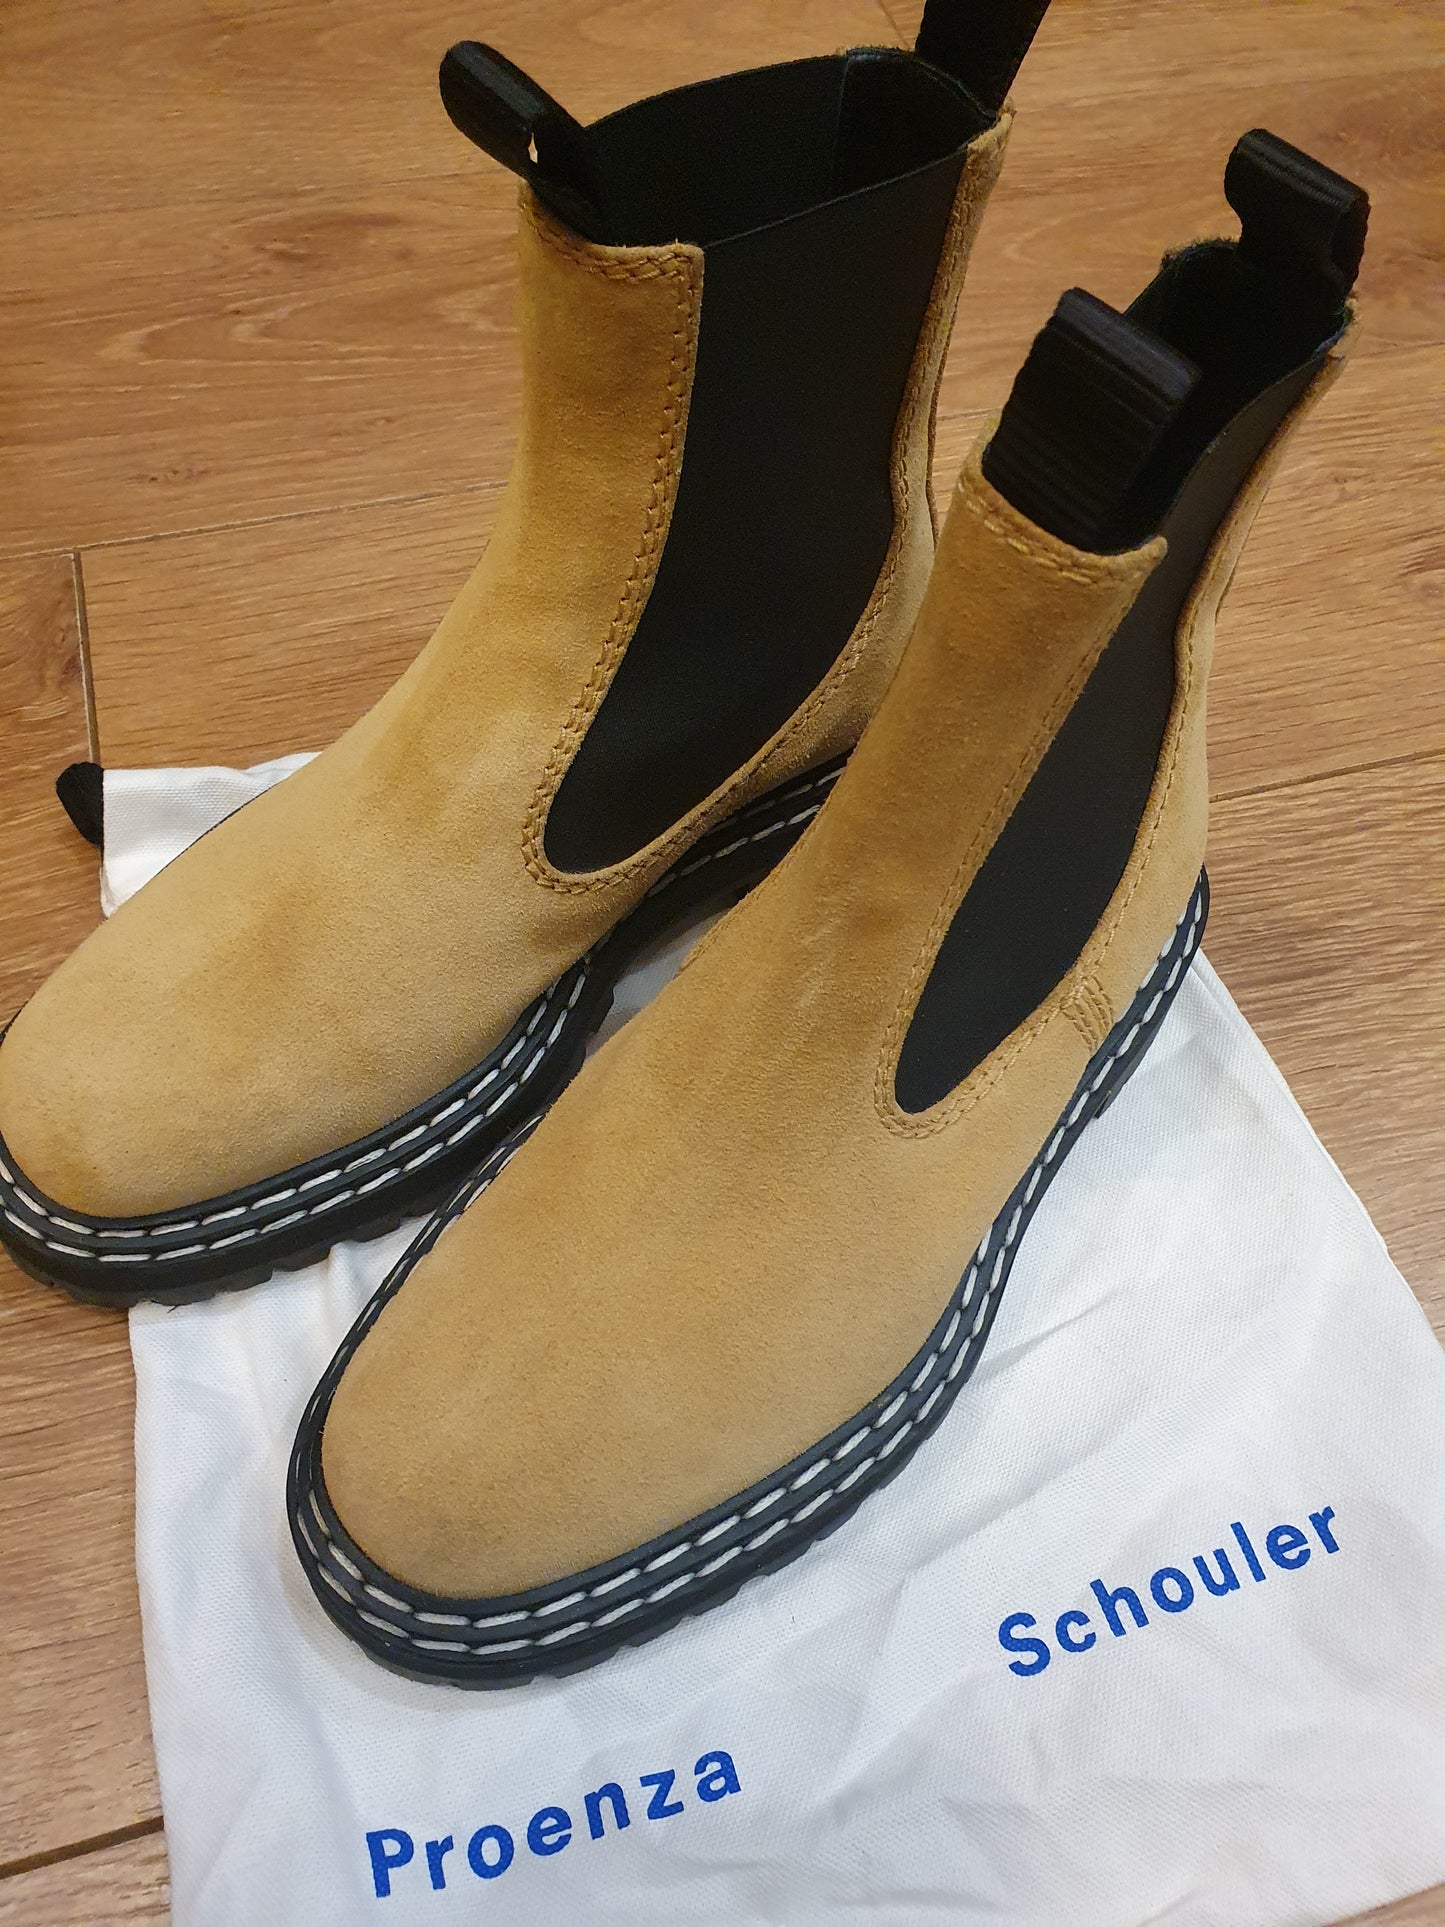 Proenza Schouler Chelsea boots, size 6